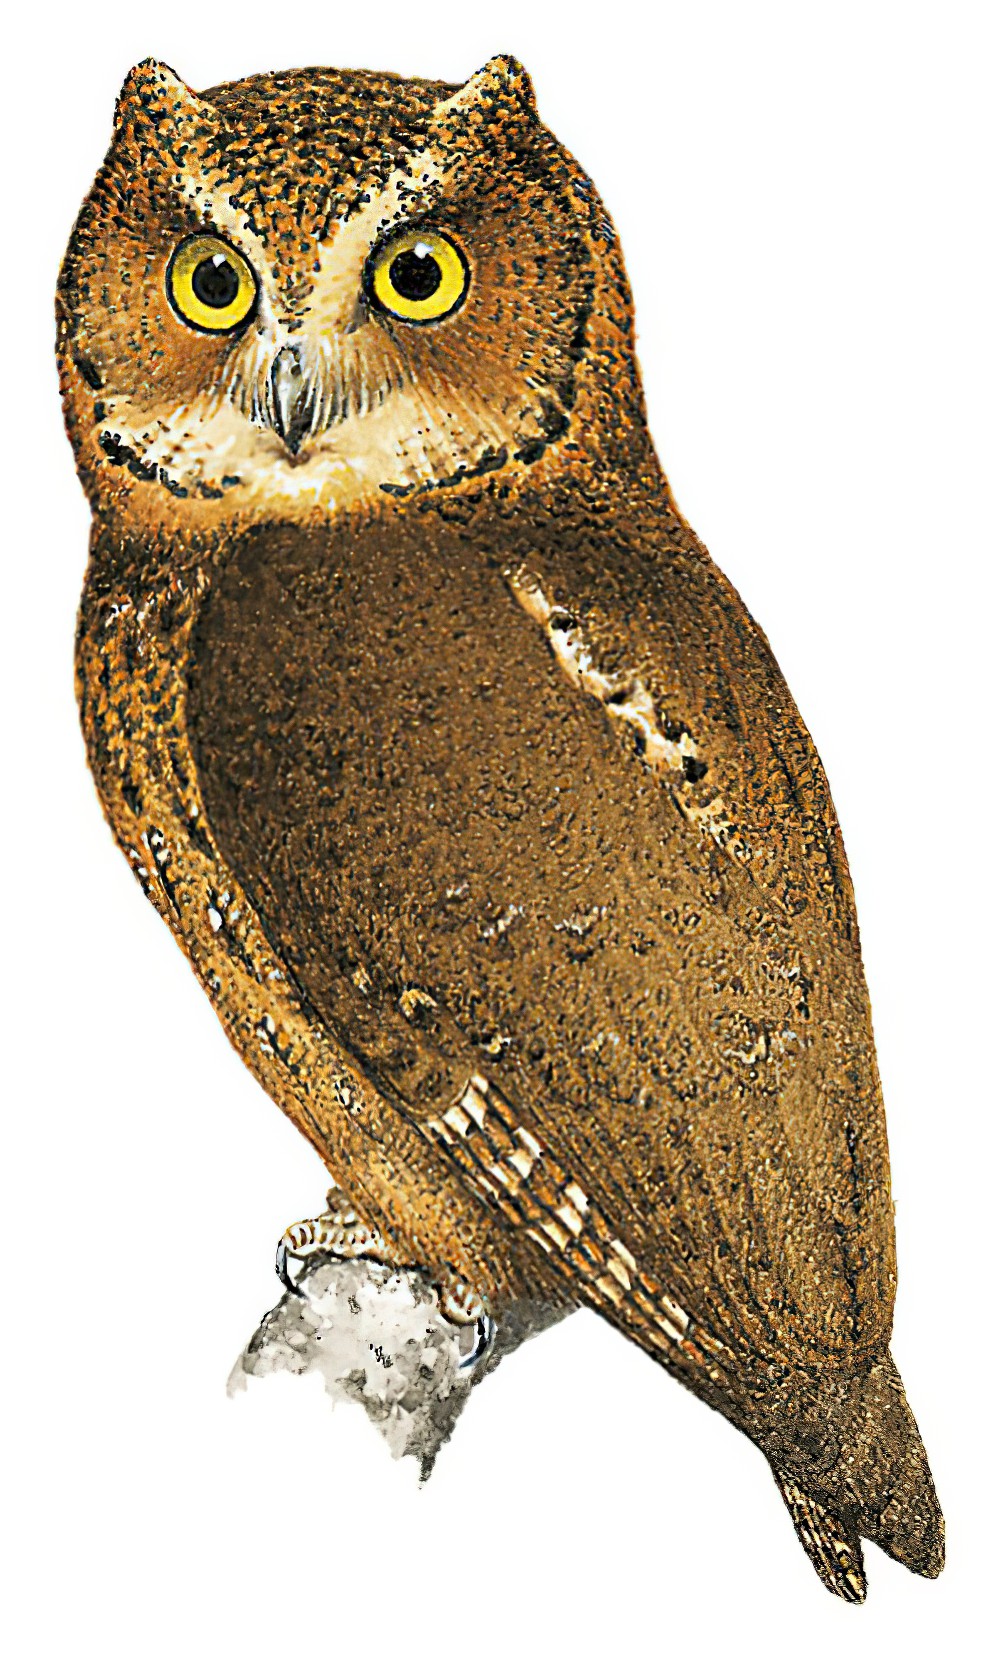 民岛角鸮 / Mindoro Scops Owl / Otus mindorensis